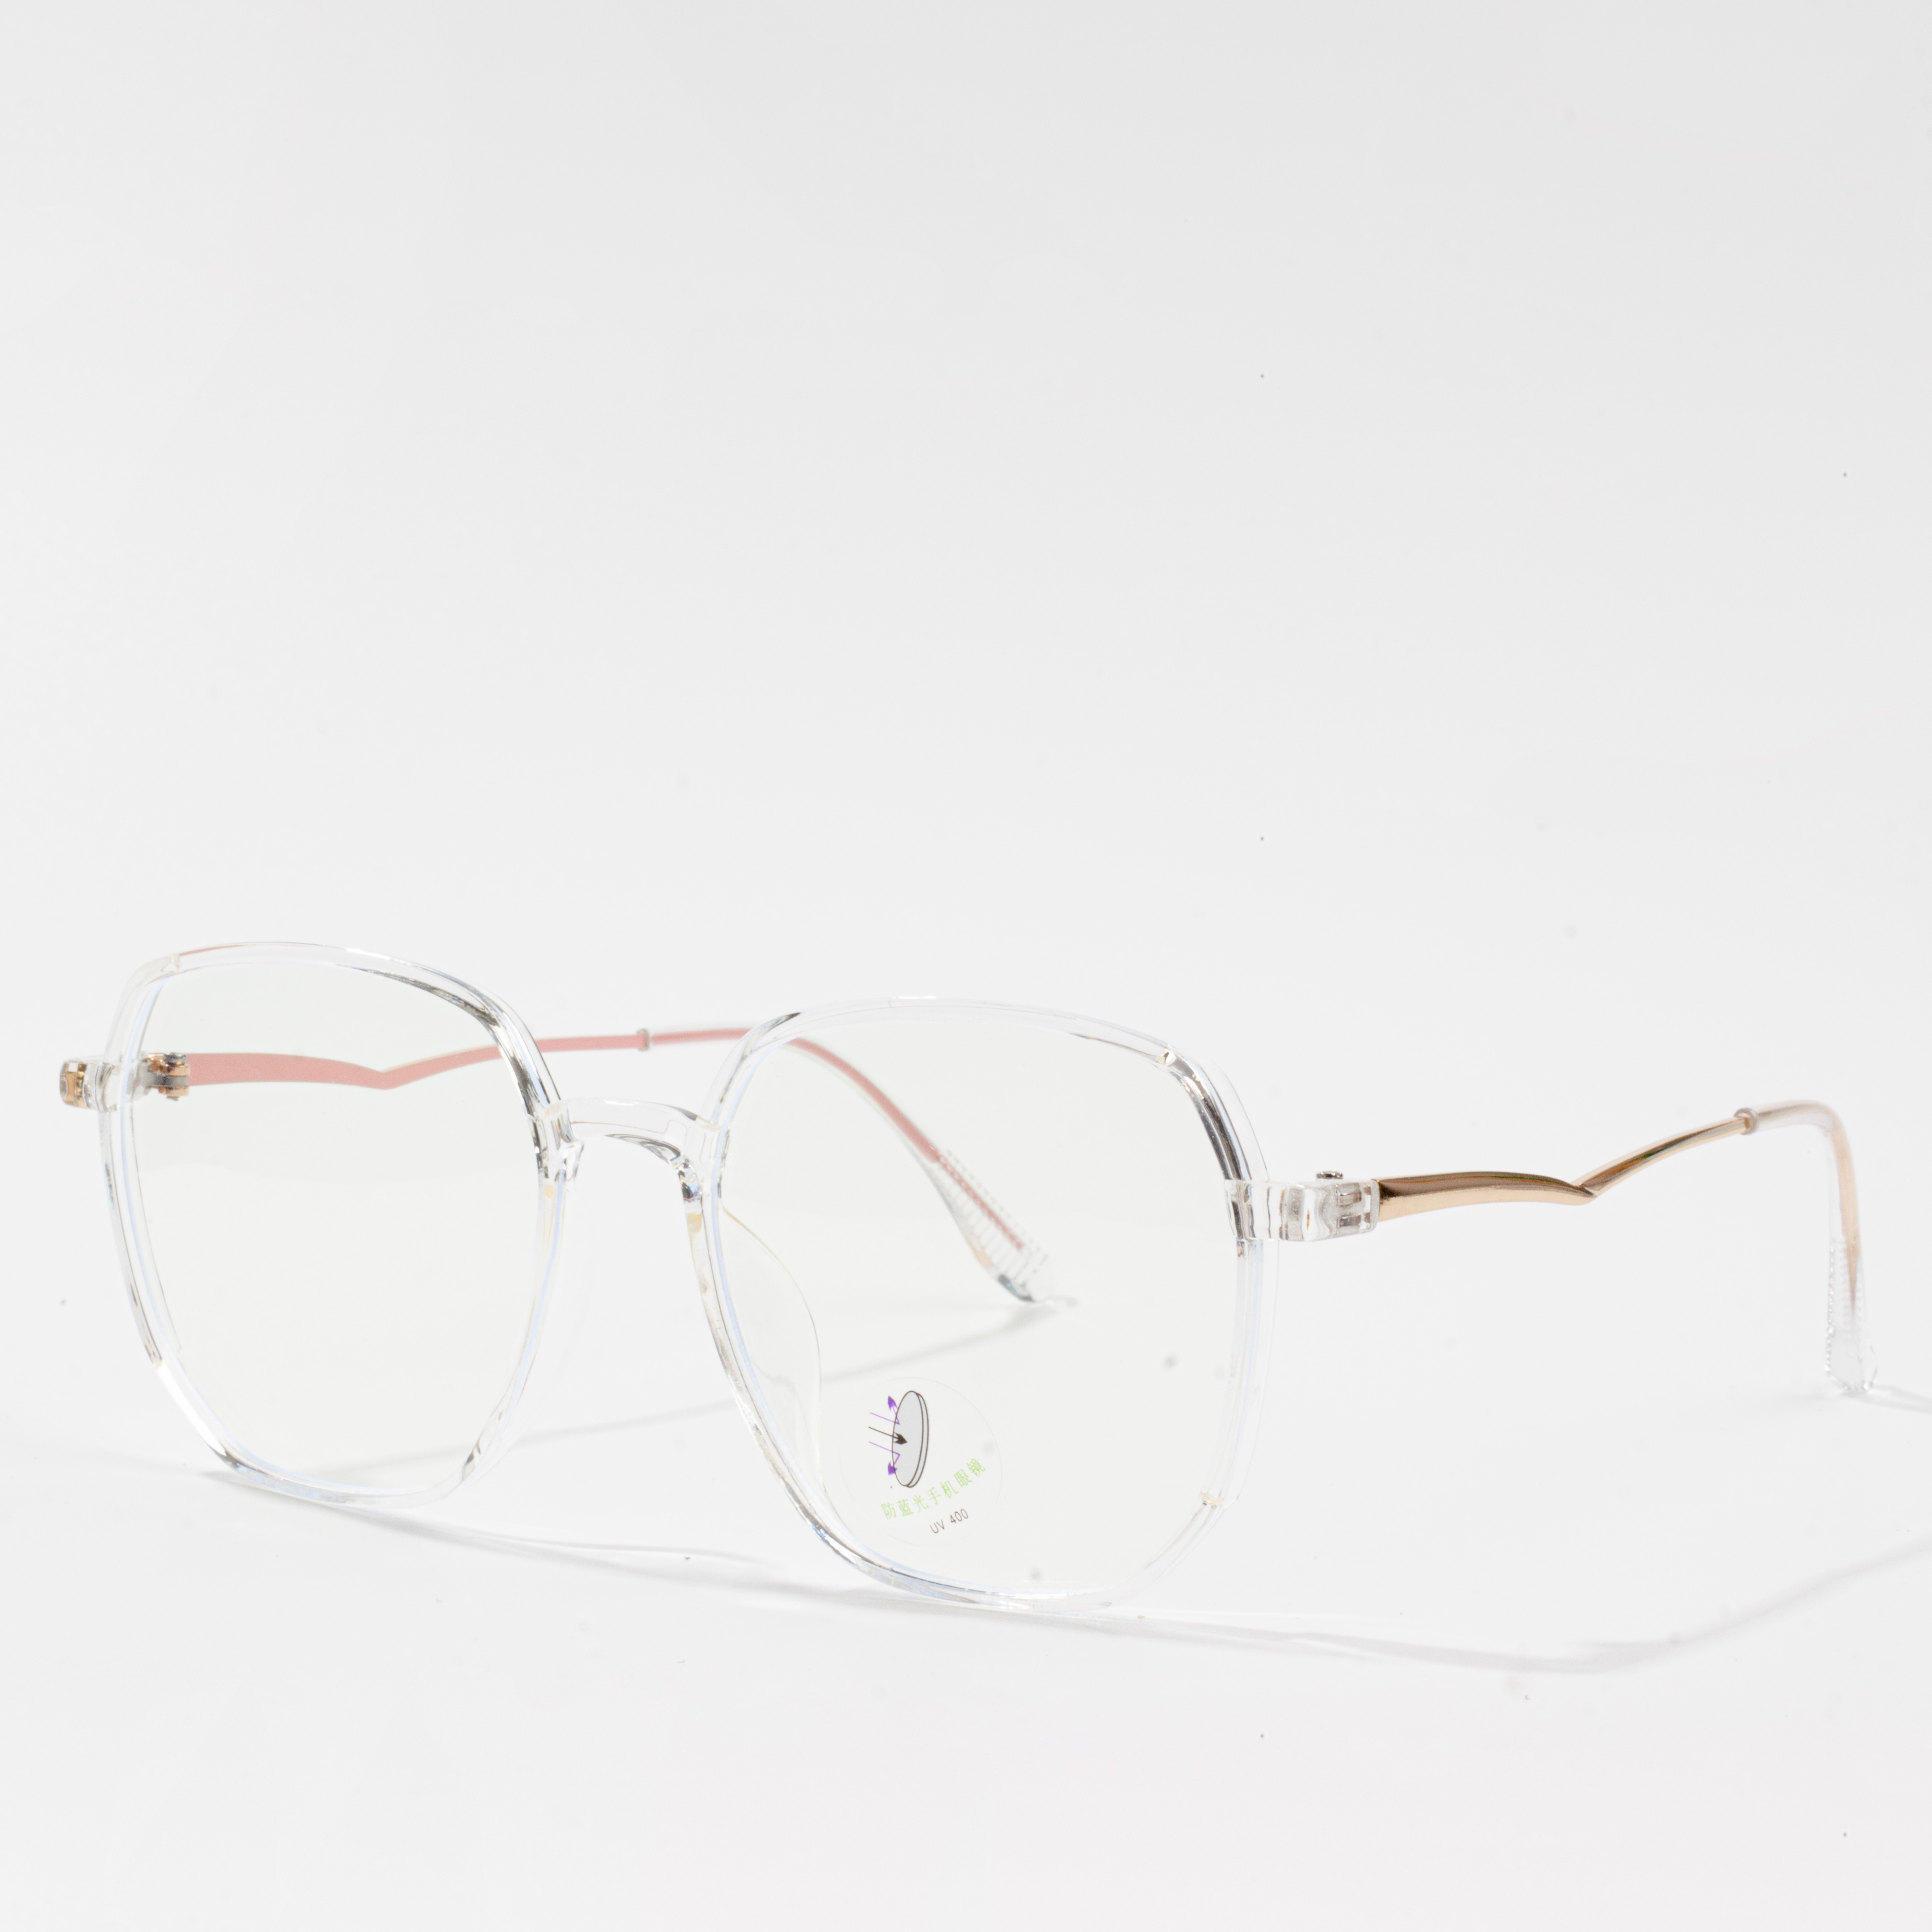 eyeglass frame